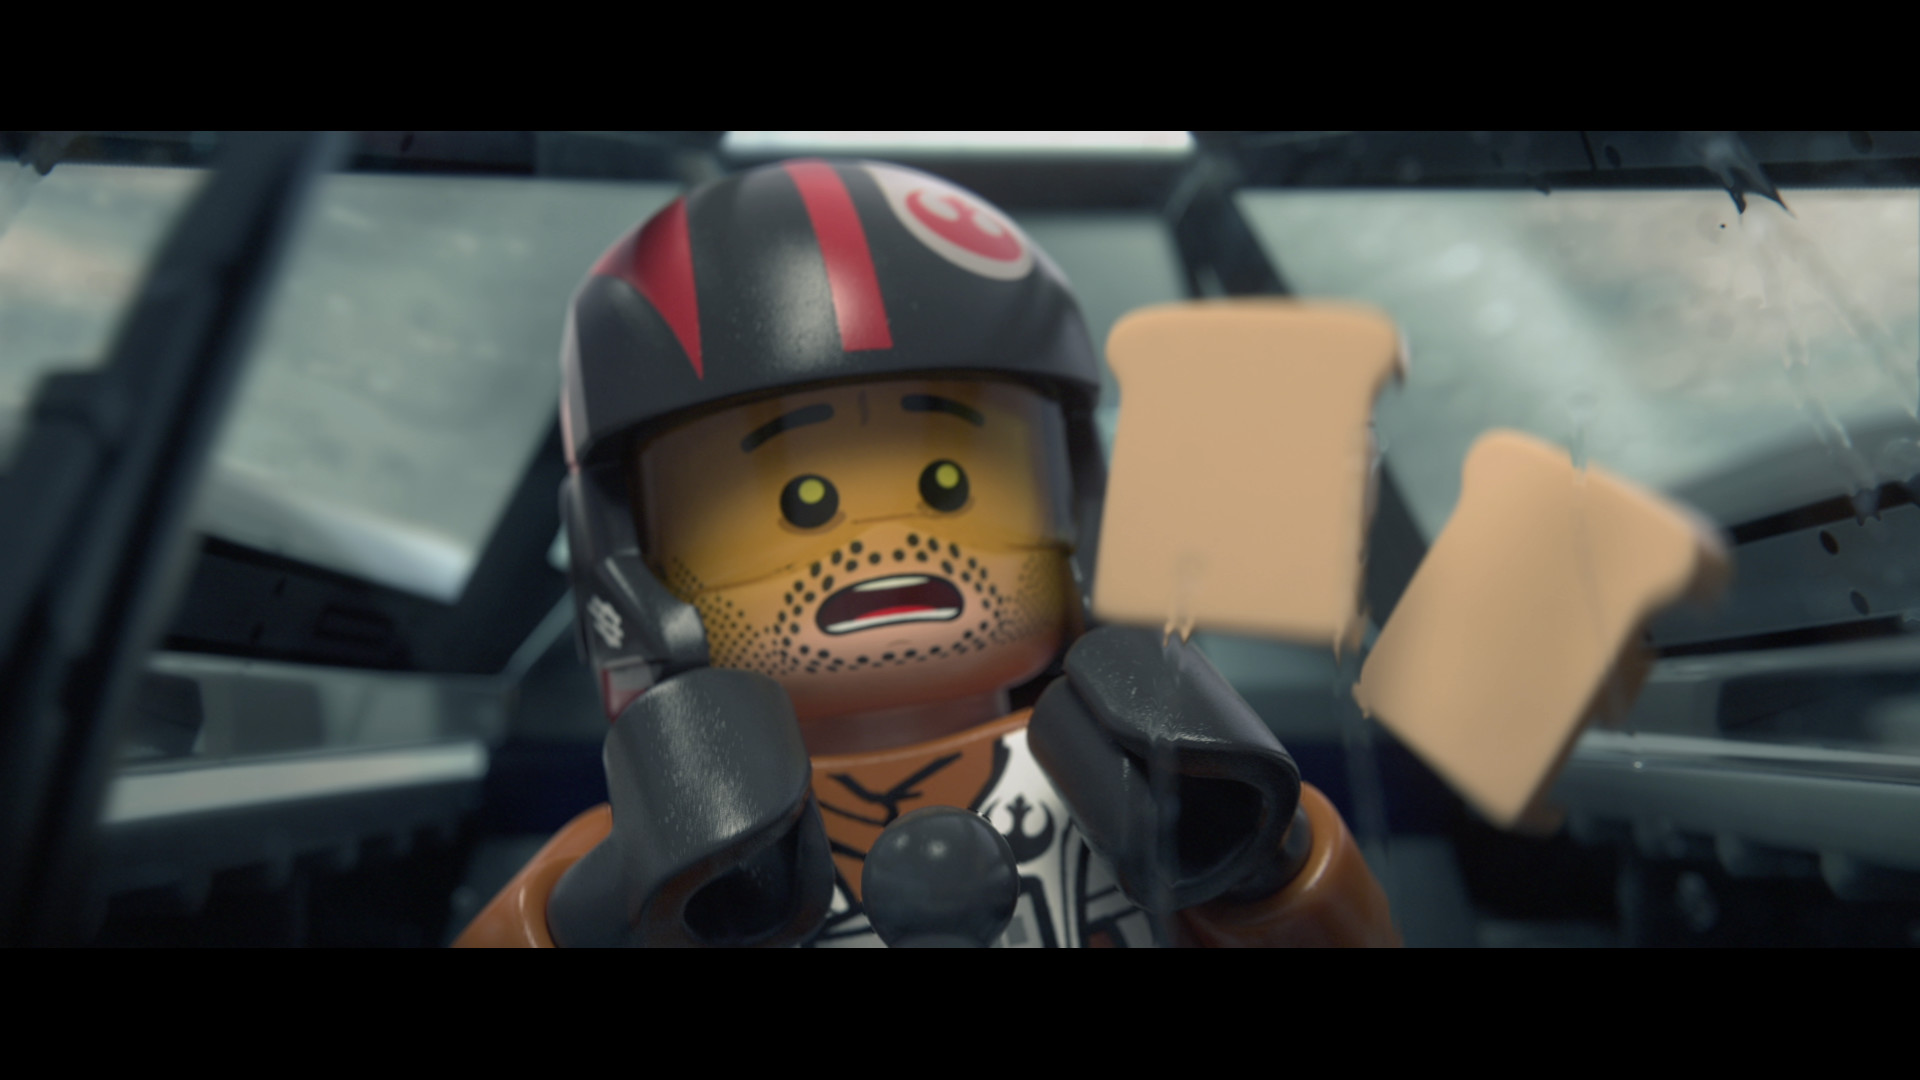 Lego Star Wars The Force Awakens Setup Free Download